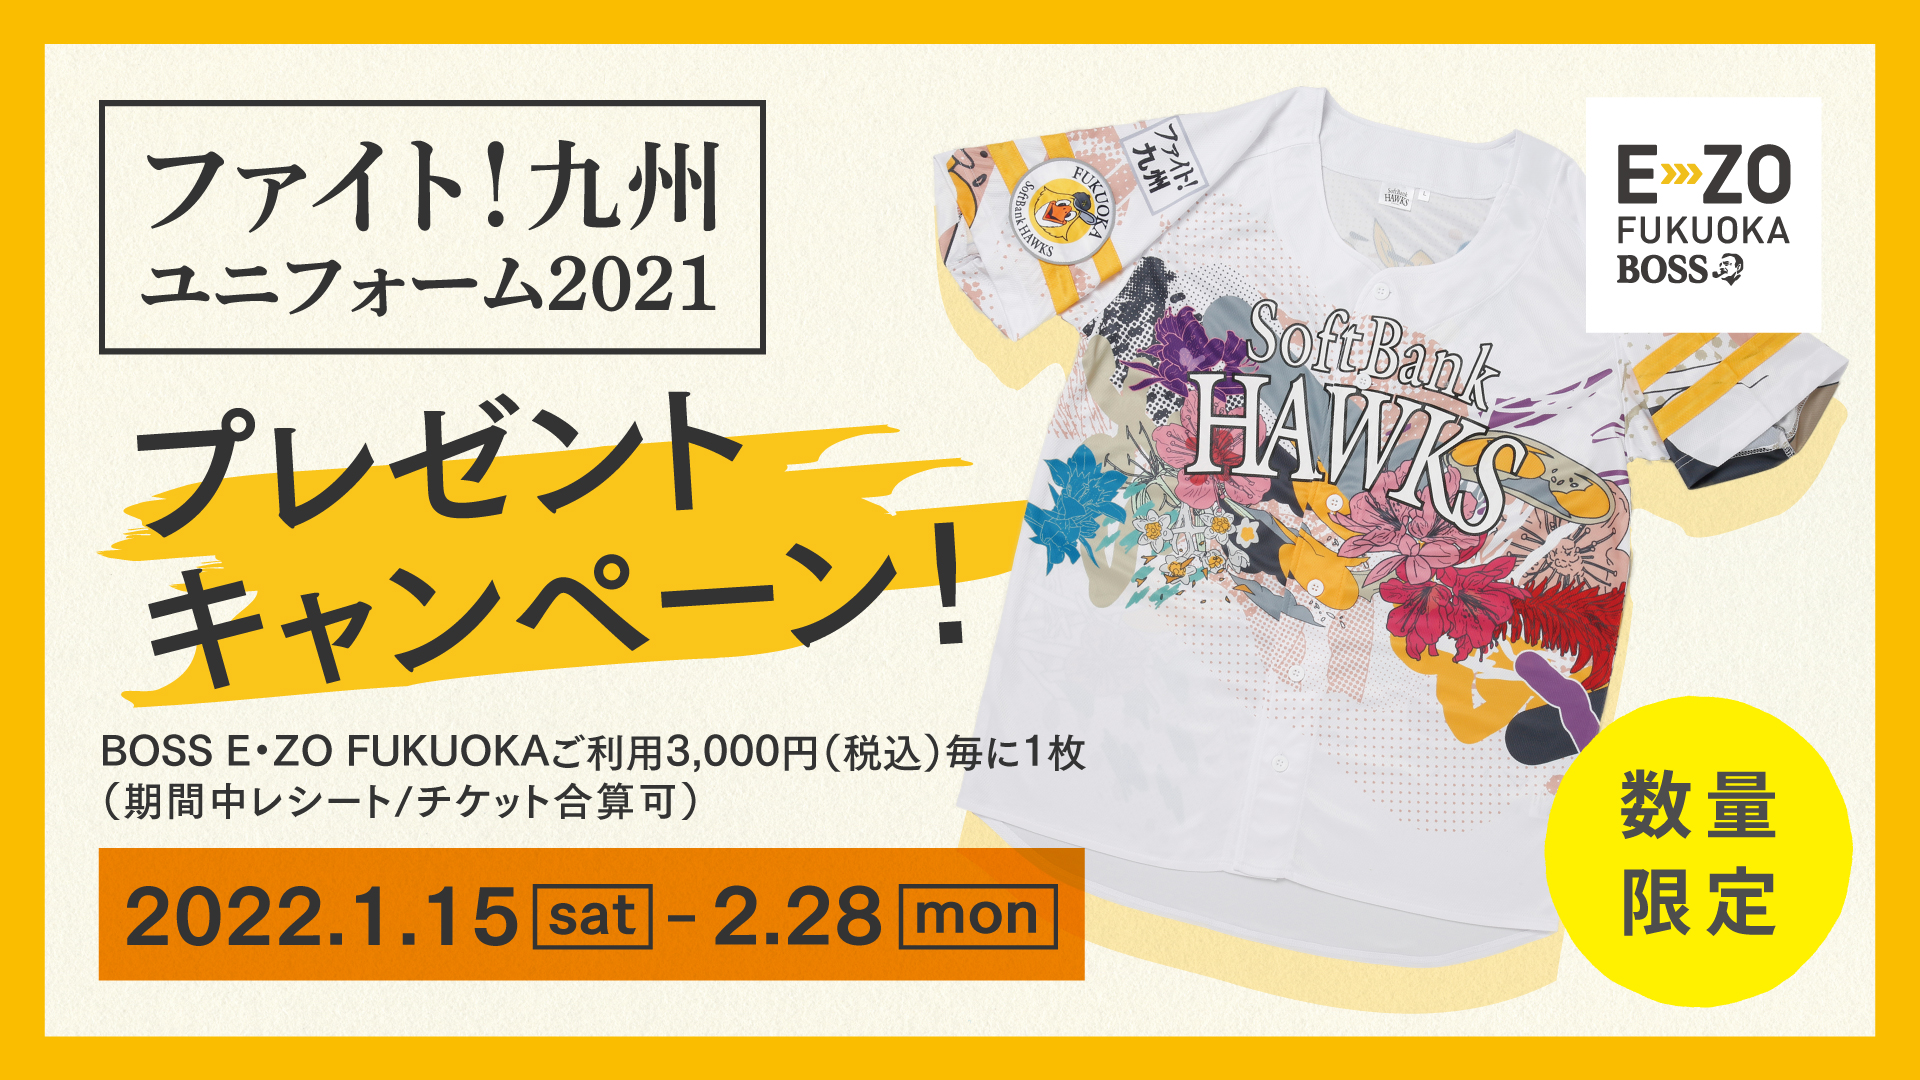 "Fight! Kyushu Uniform 2021" will be presented by using E ・ ZO!